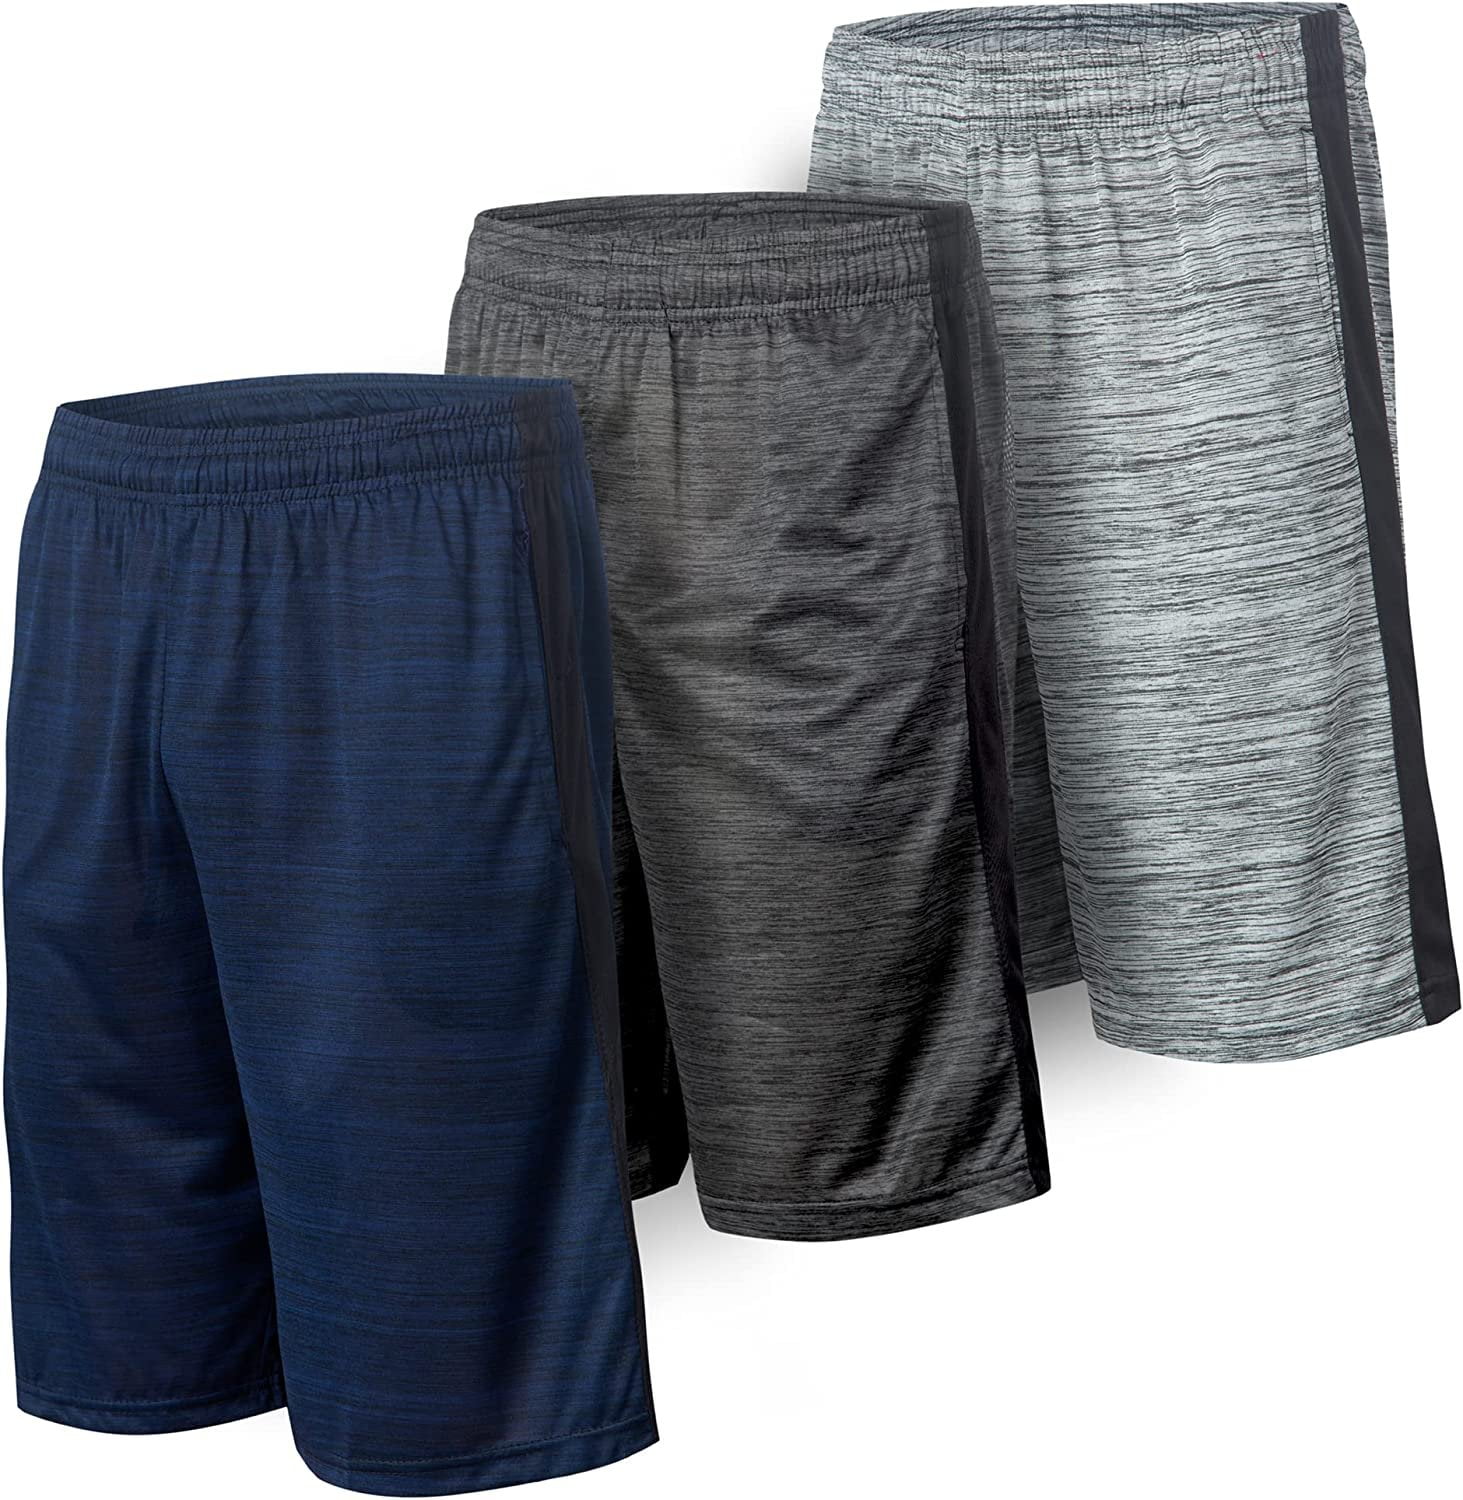 Athletic Shorts for Men - Men's Basketball Shorts - Sports Shorts for ...